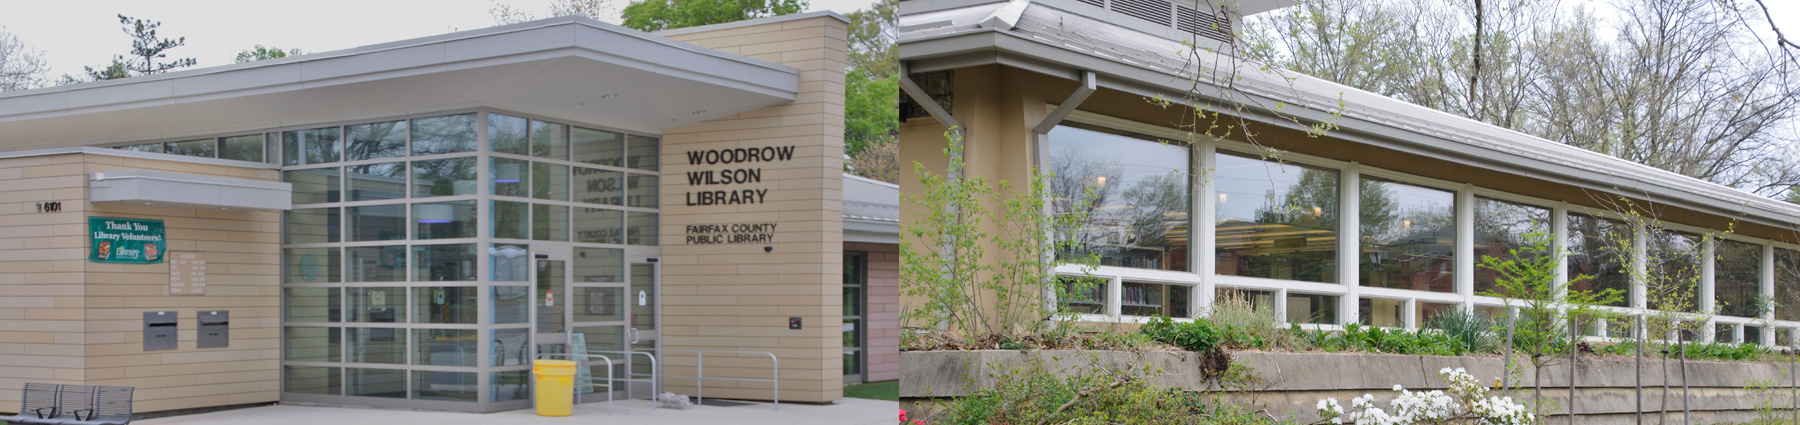 Woodrow Wilson Library